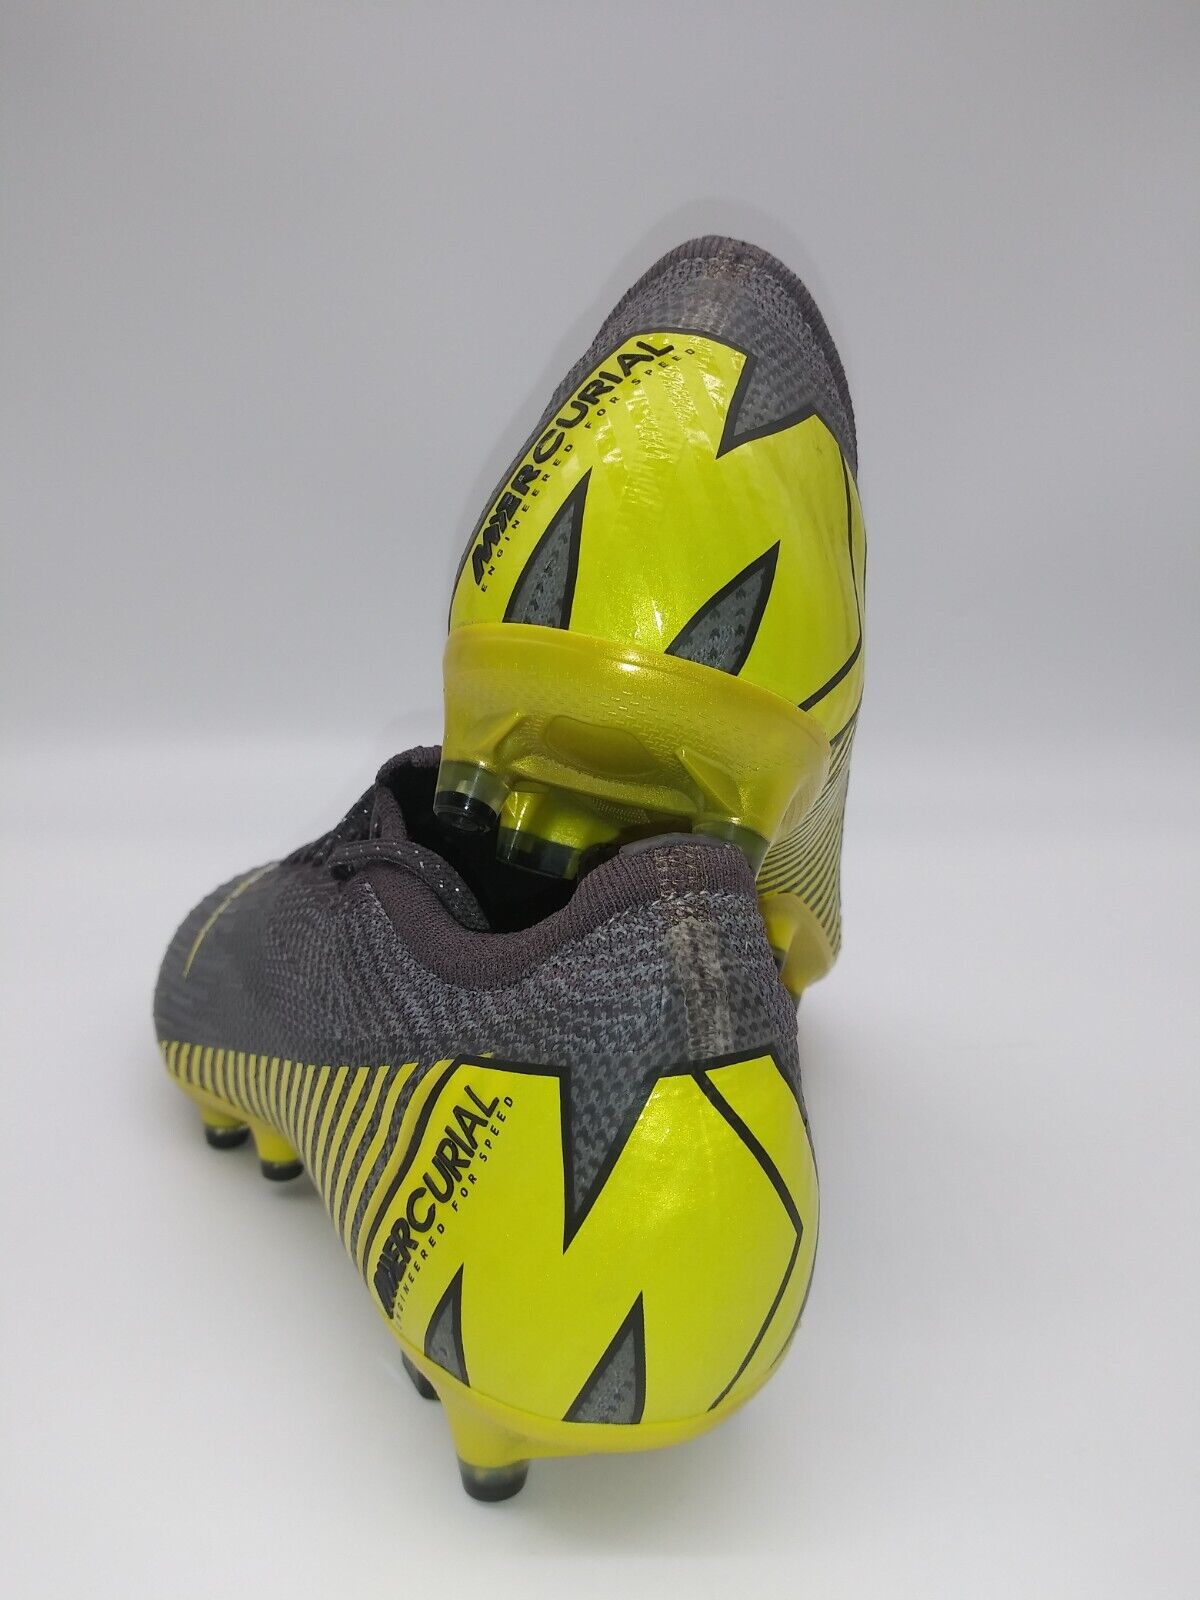 Nike Vapor 12 Elite 360 AG Pro Grey Villegas Footwear